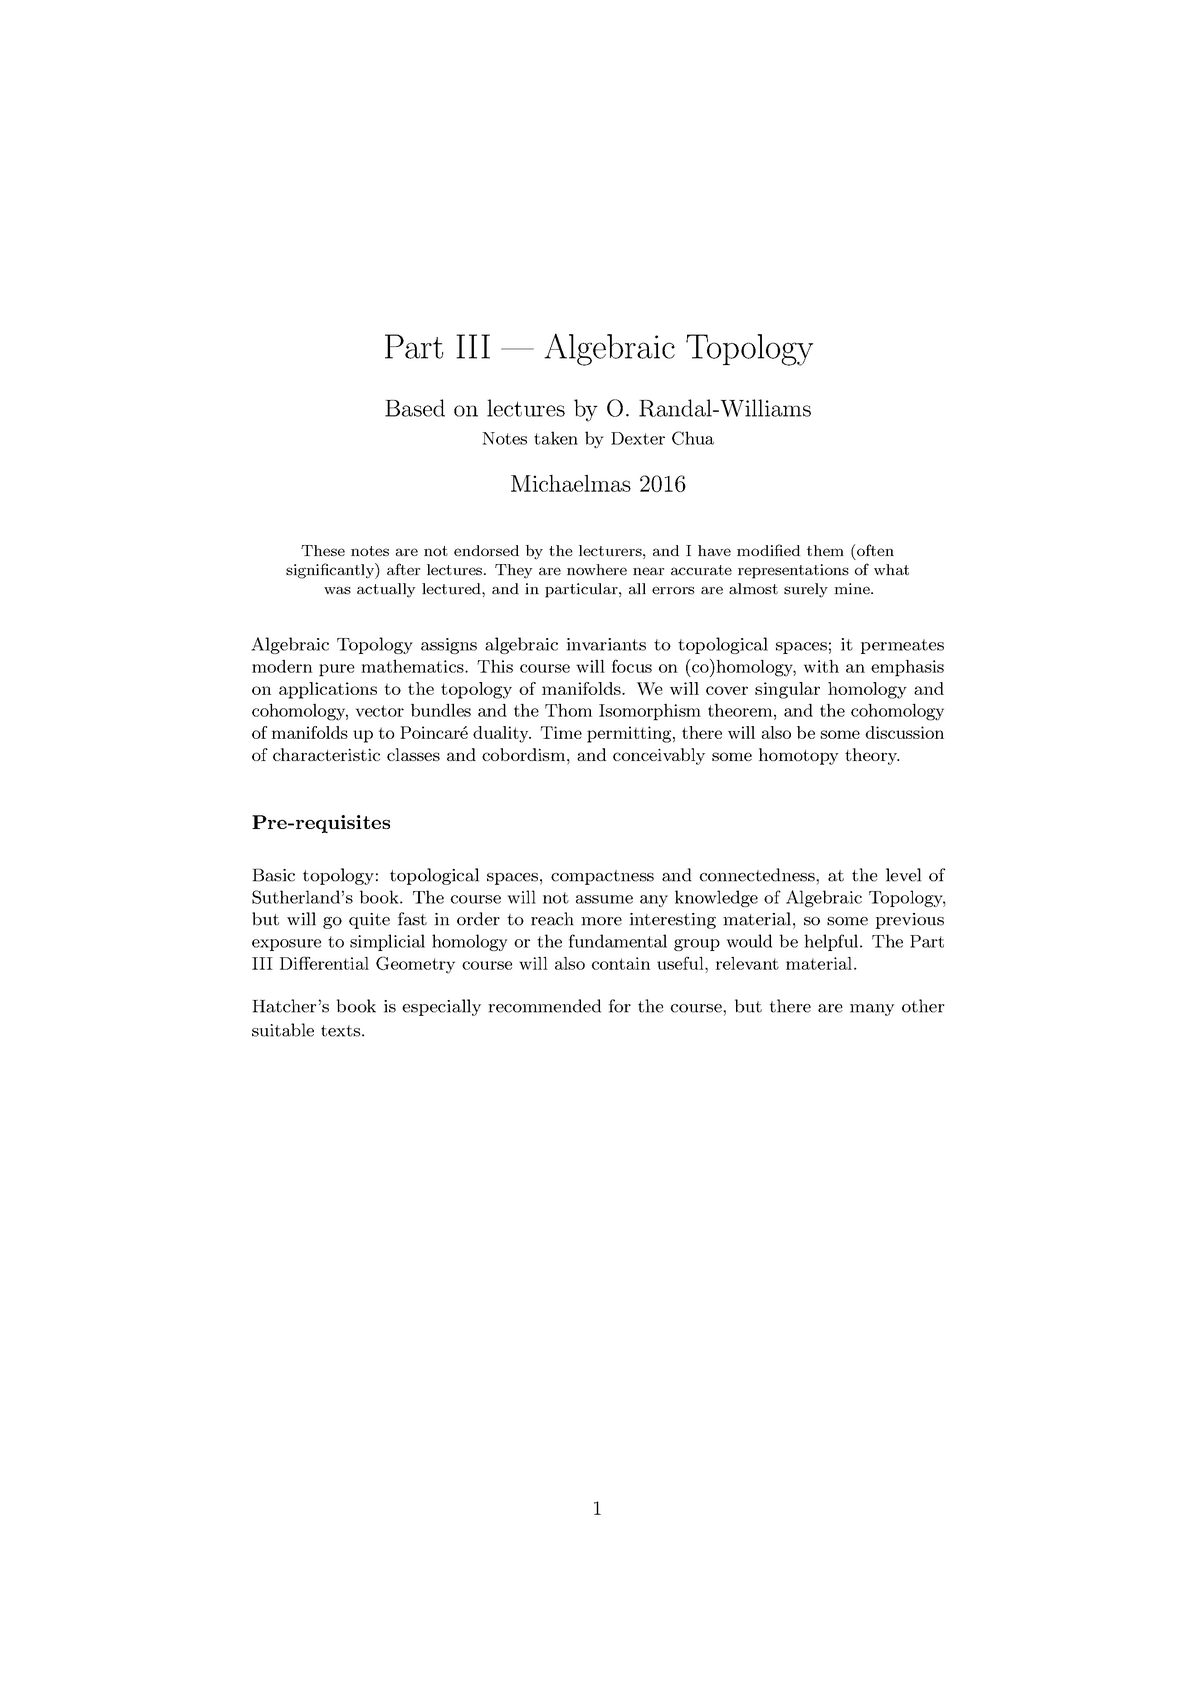 algebraic-topology-3-part-iii-algebraic-topology-based-on-lectures